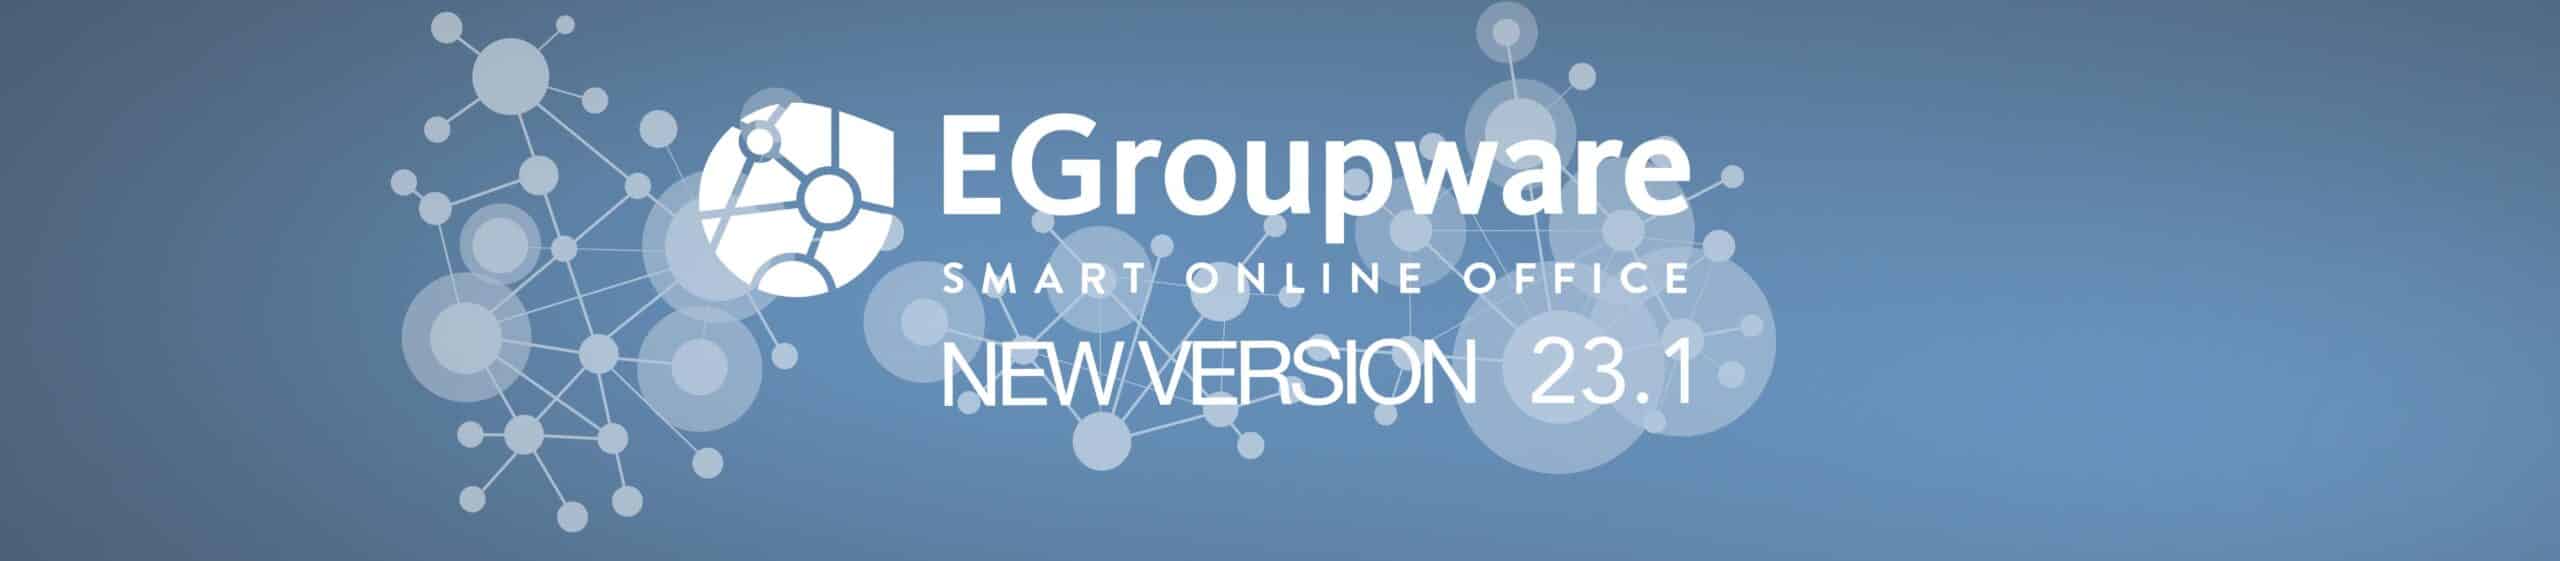 New EGroupware Version 23.1 Open Source Groupware